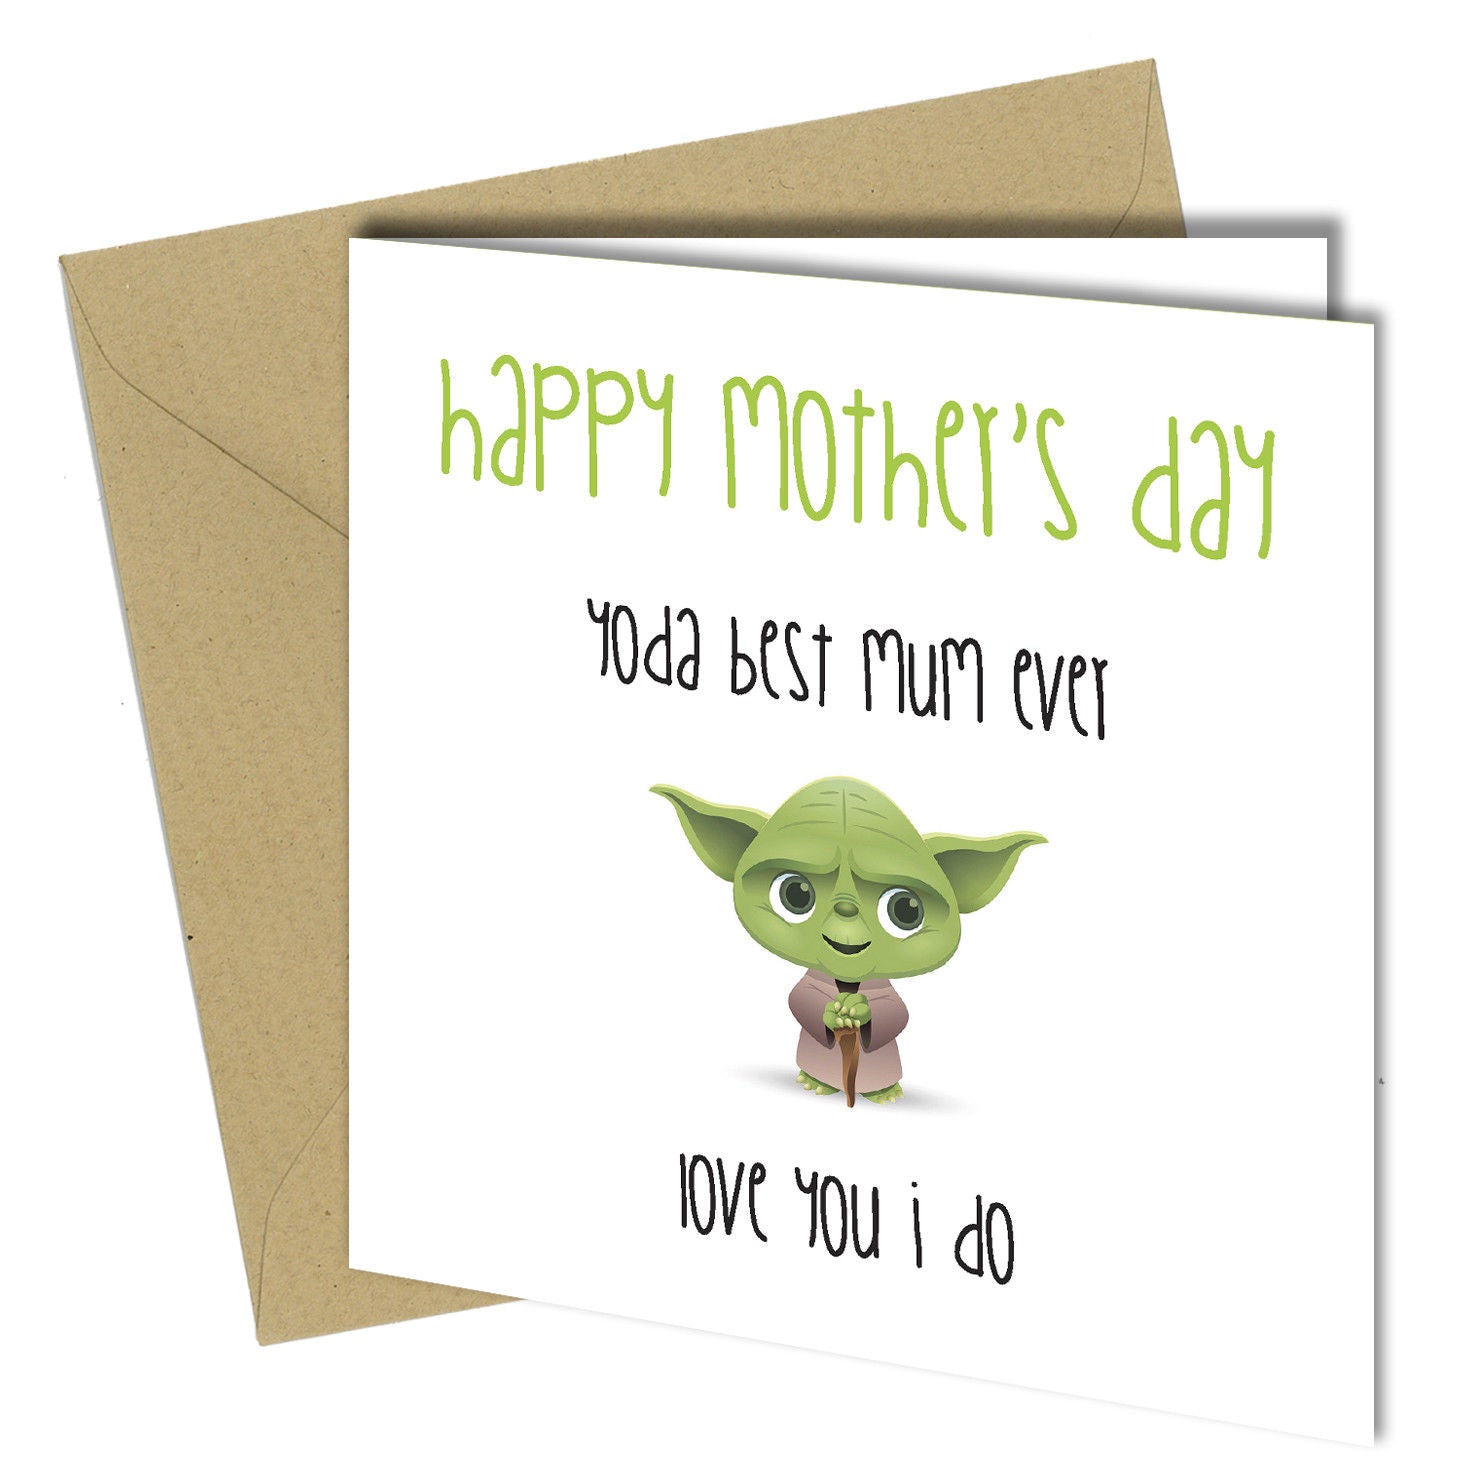 #499 Yoda Best Mum